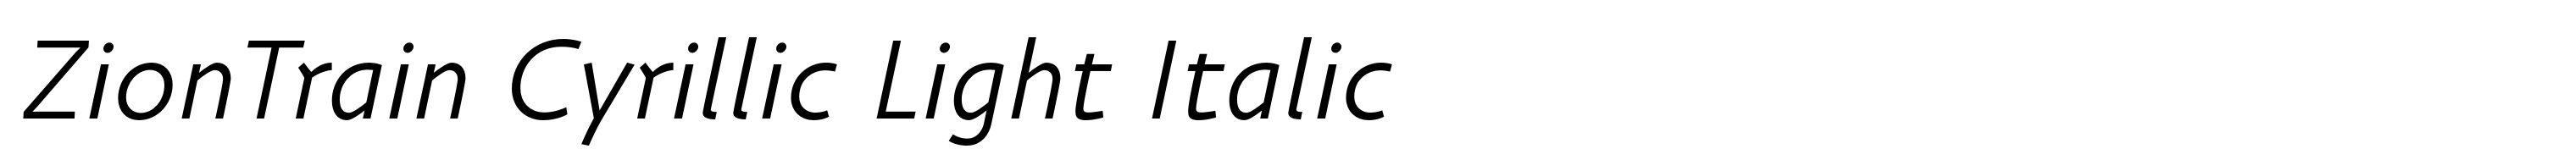 ZionTrain Cyrillic Light Italic